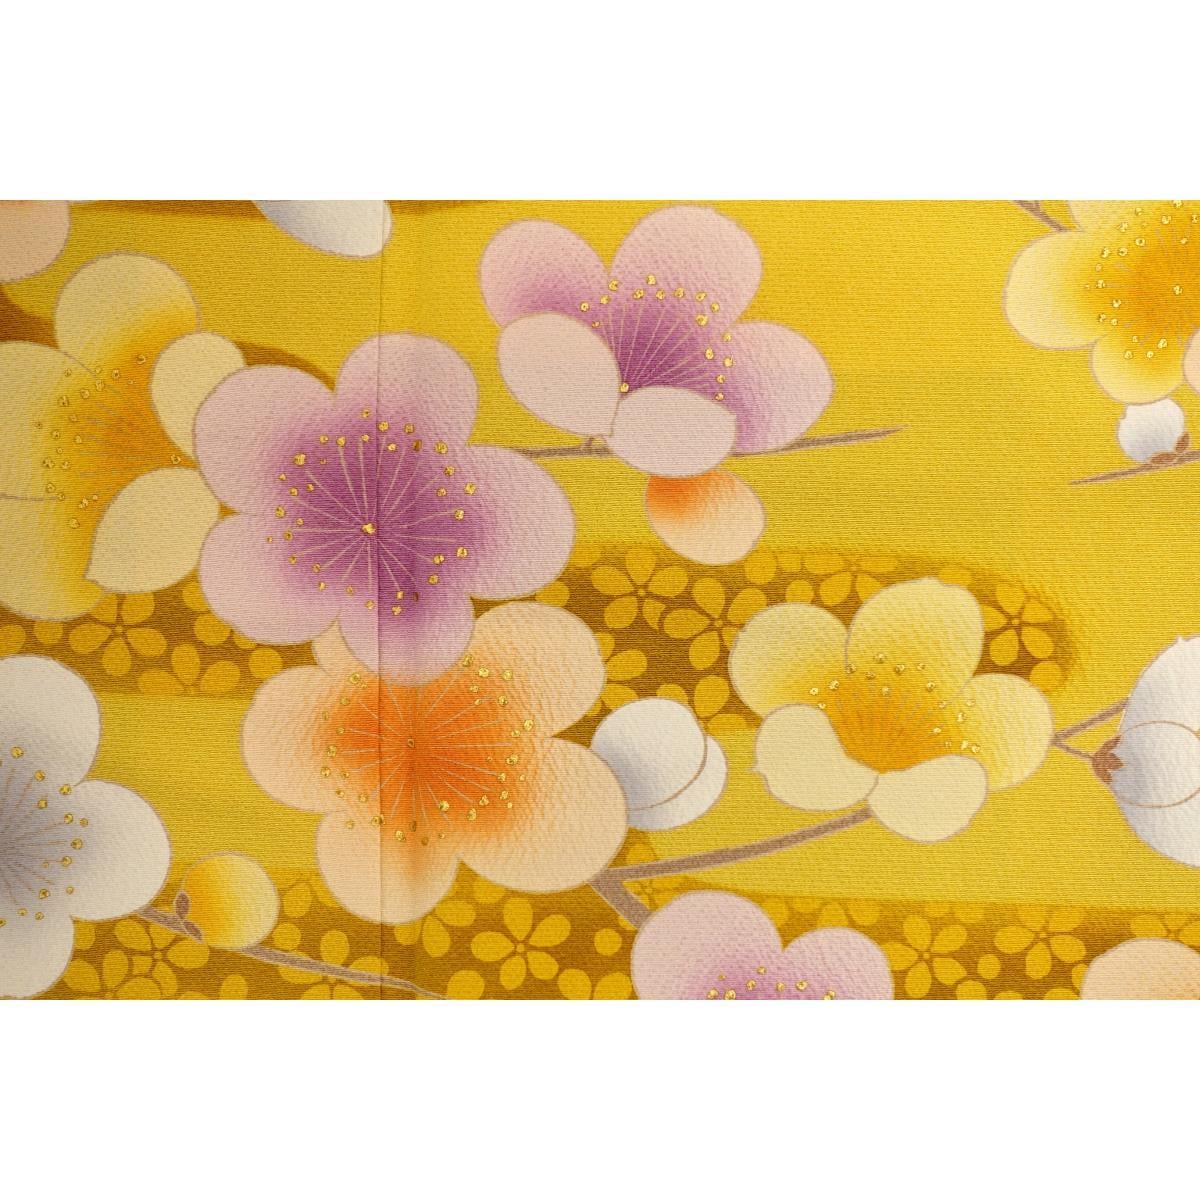 [Unused items] Furisode Yuzen gold-colored kimono/Nagajun undergarment 2-piece set